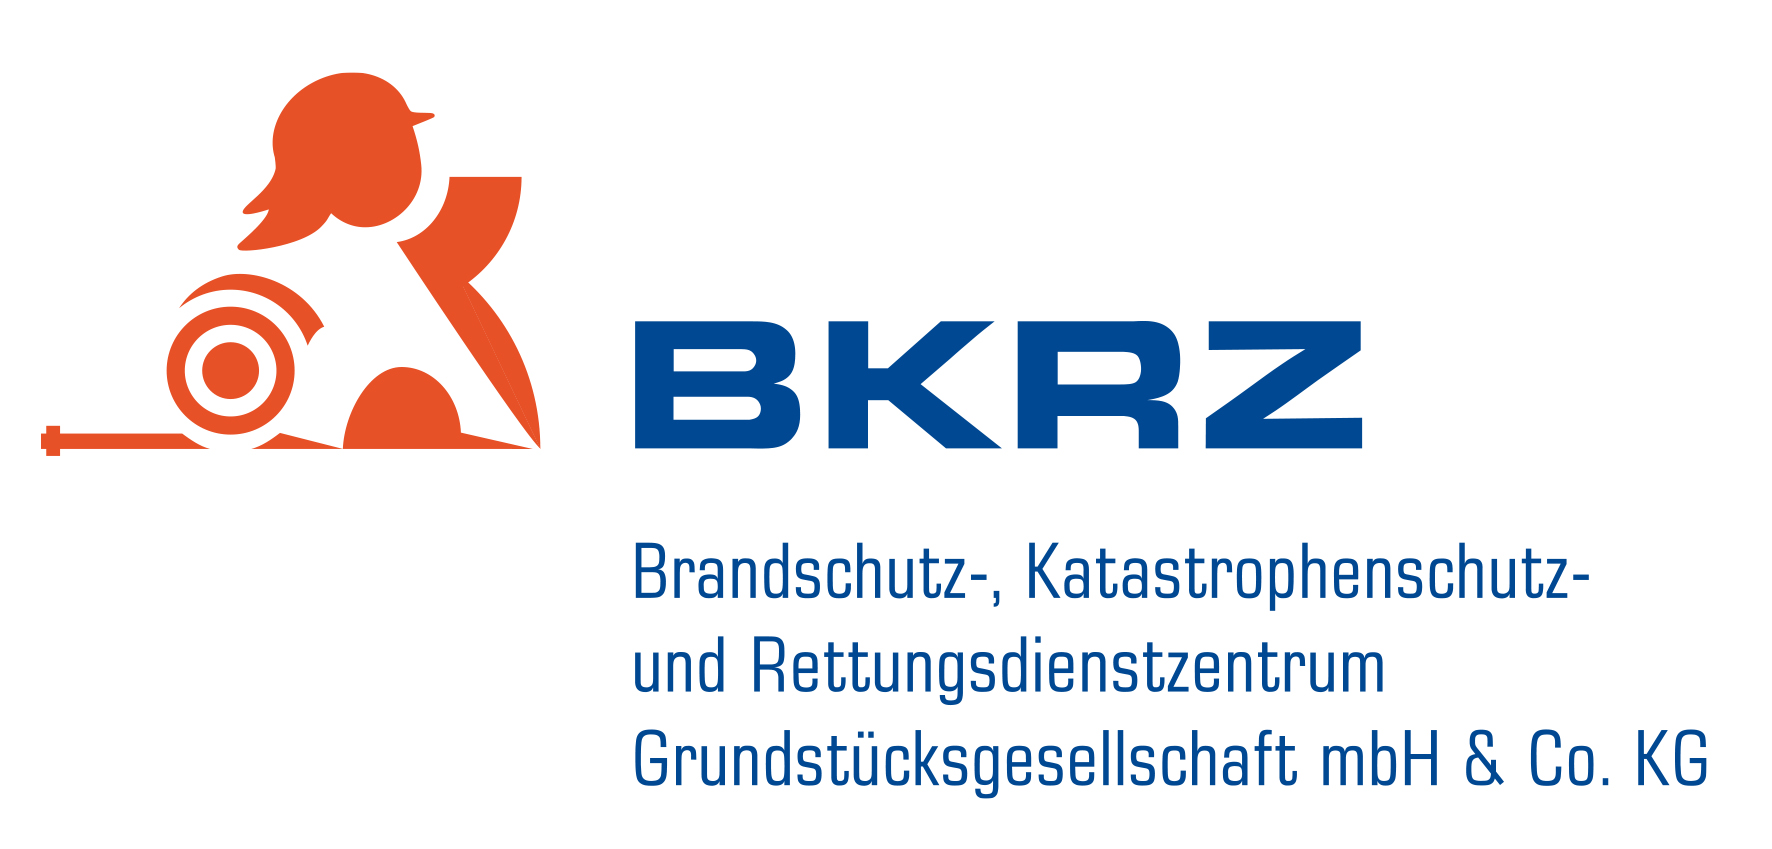 LOGO BKRZ | © BKRZ GmbH & Co. KG